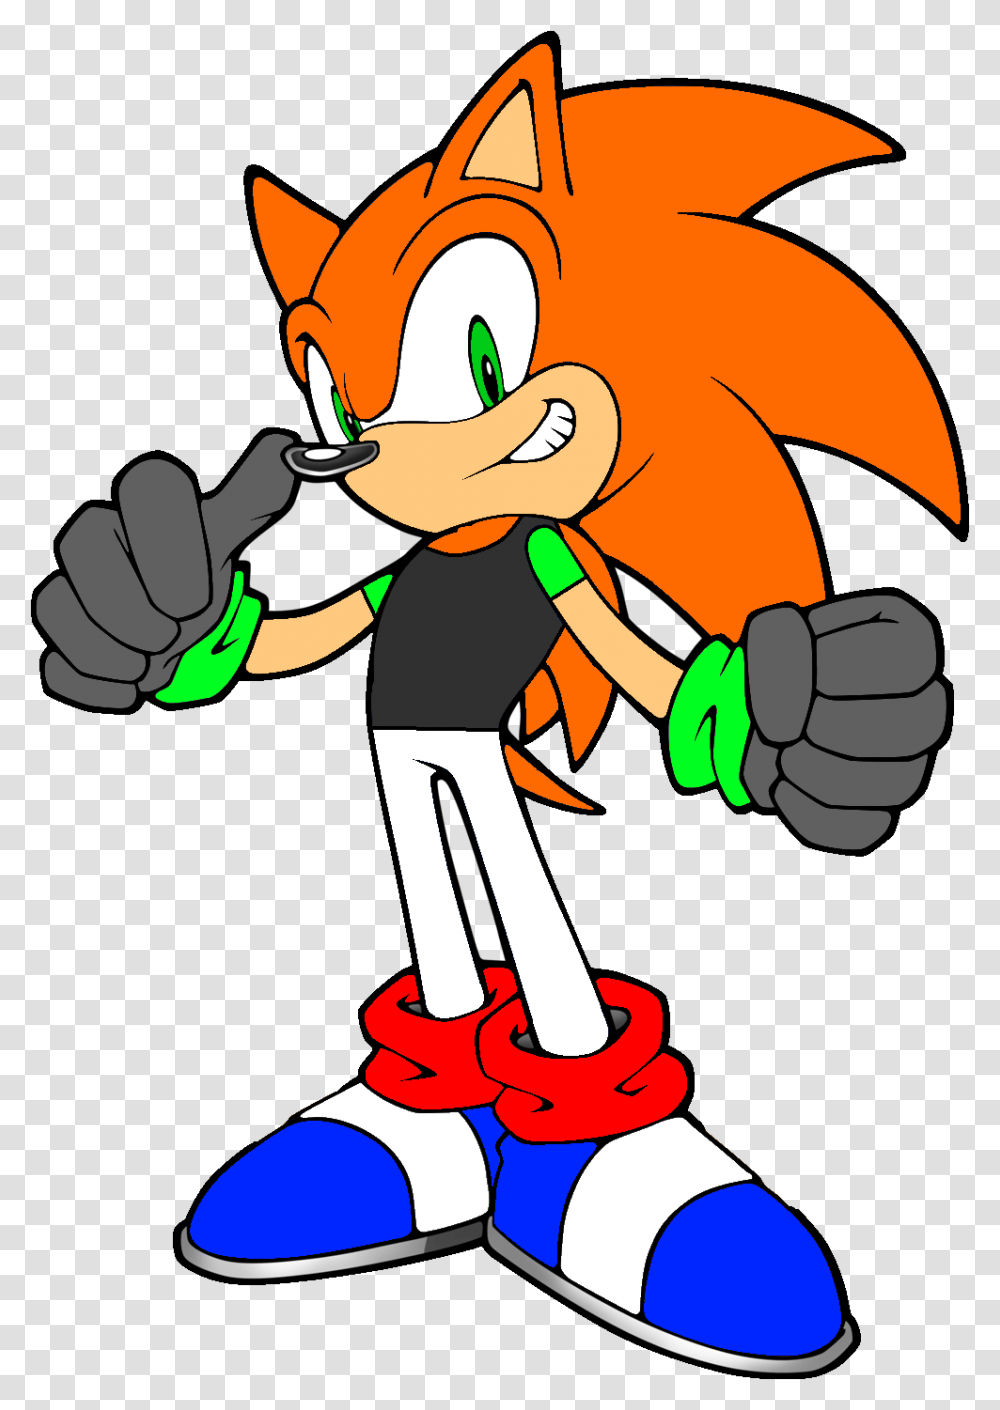 Super Sonic The Hedgehog Sonic The Hedgehog Orange, Hand, Fist Transparent Png